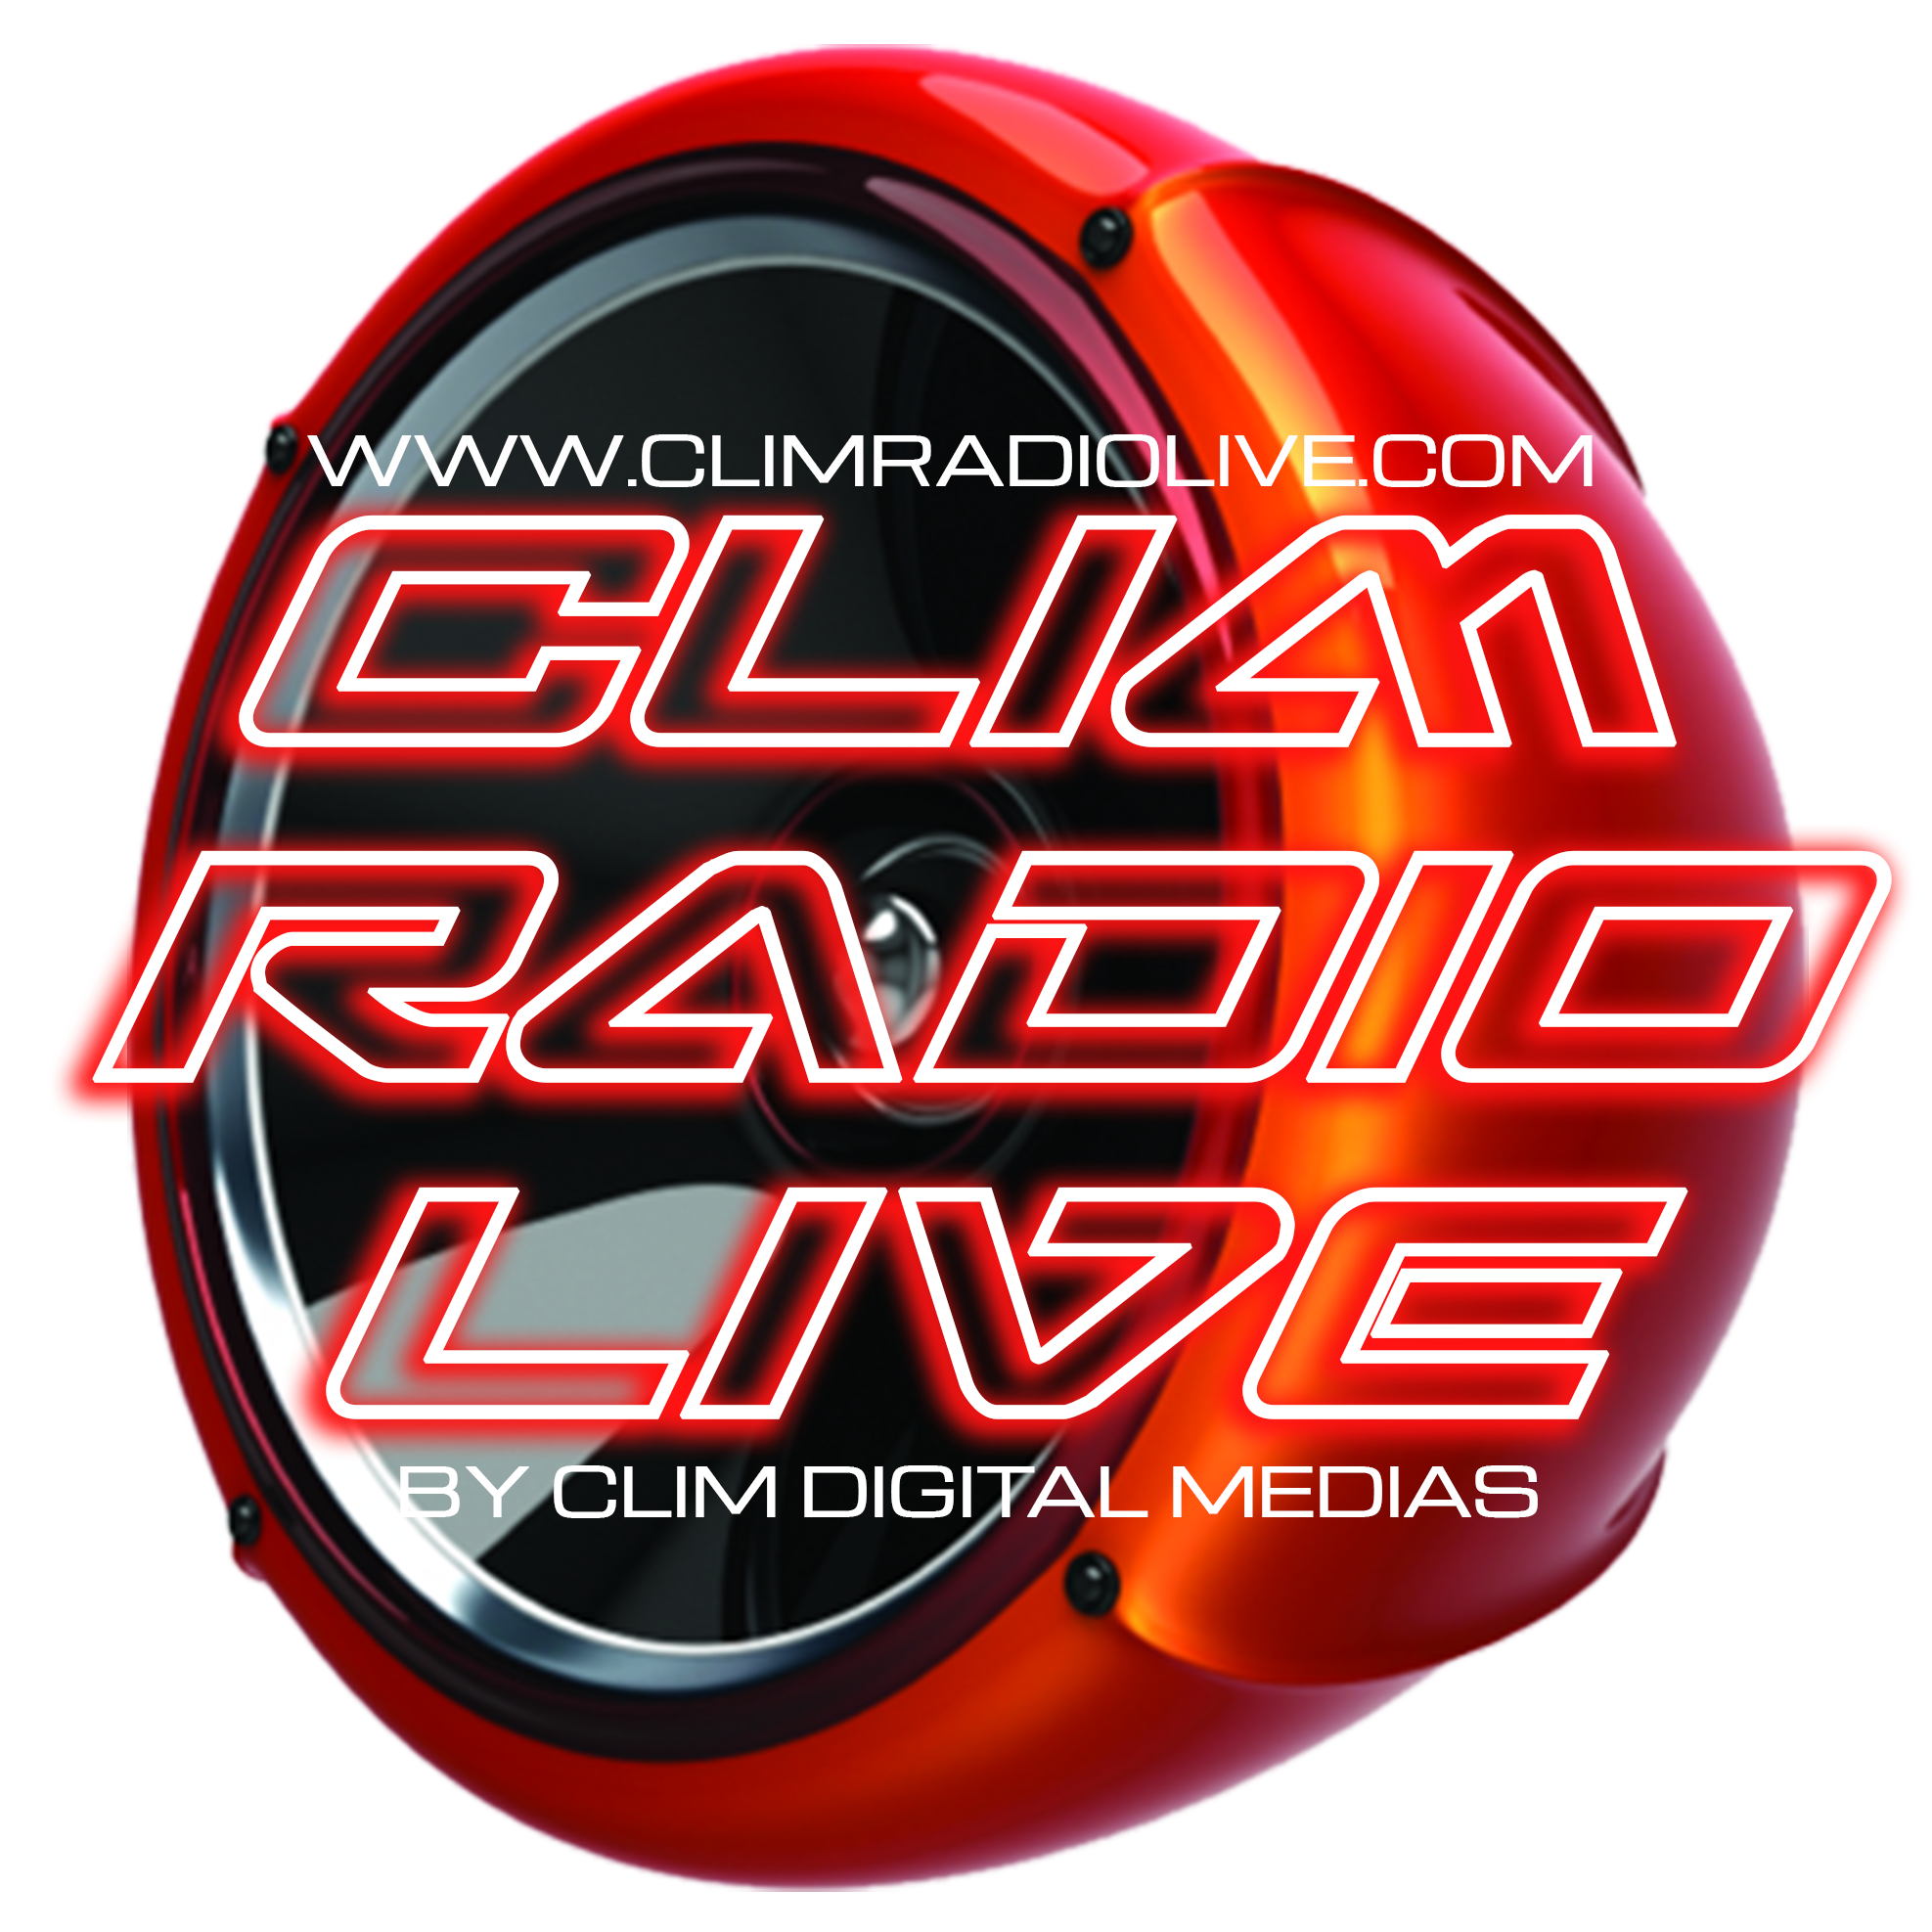 Clim Radio Live